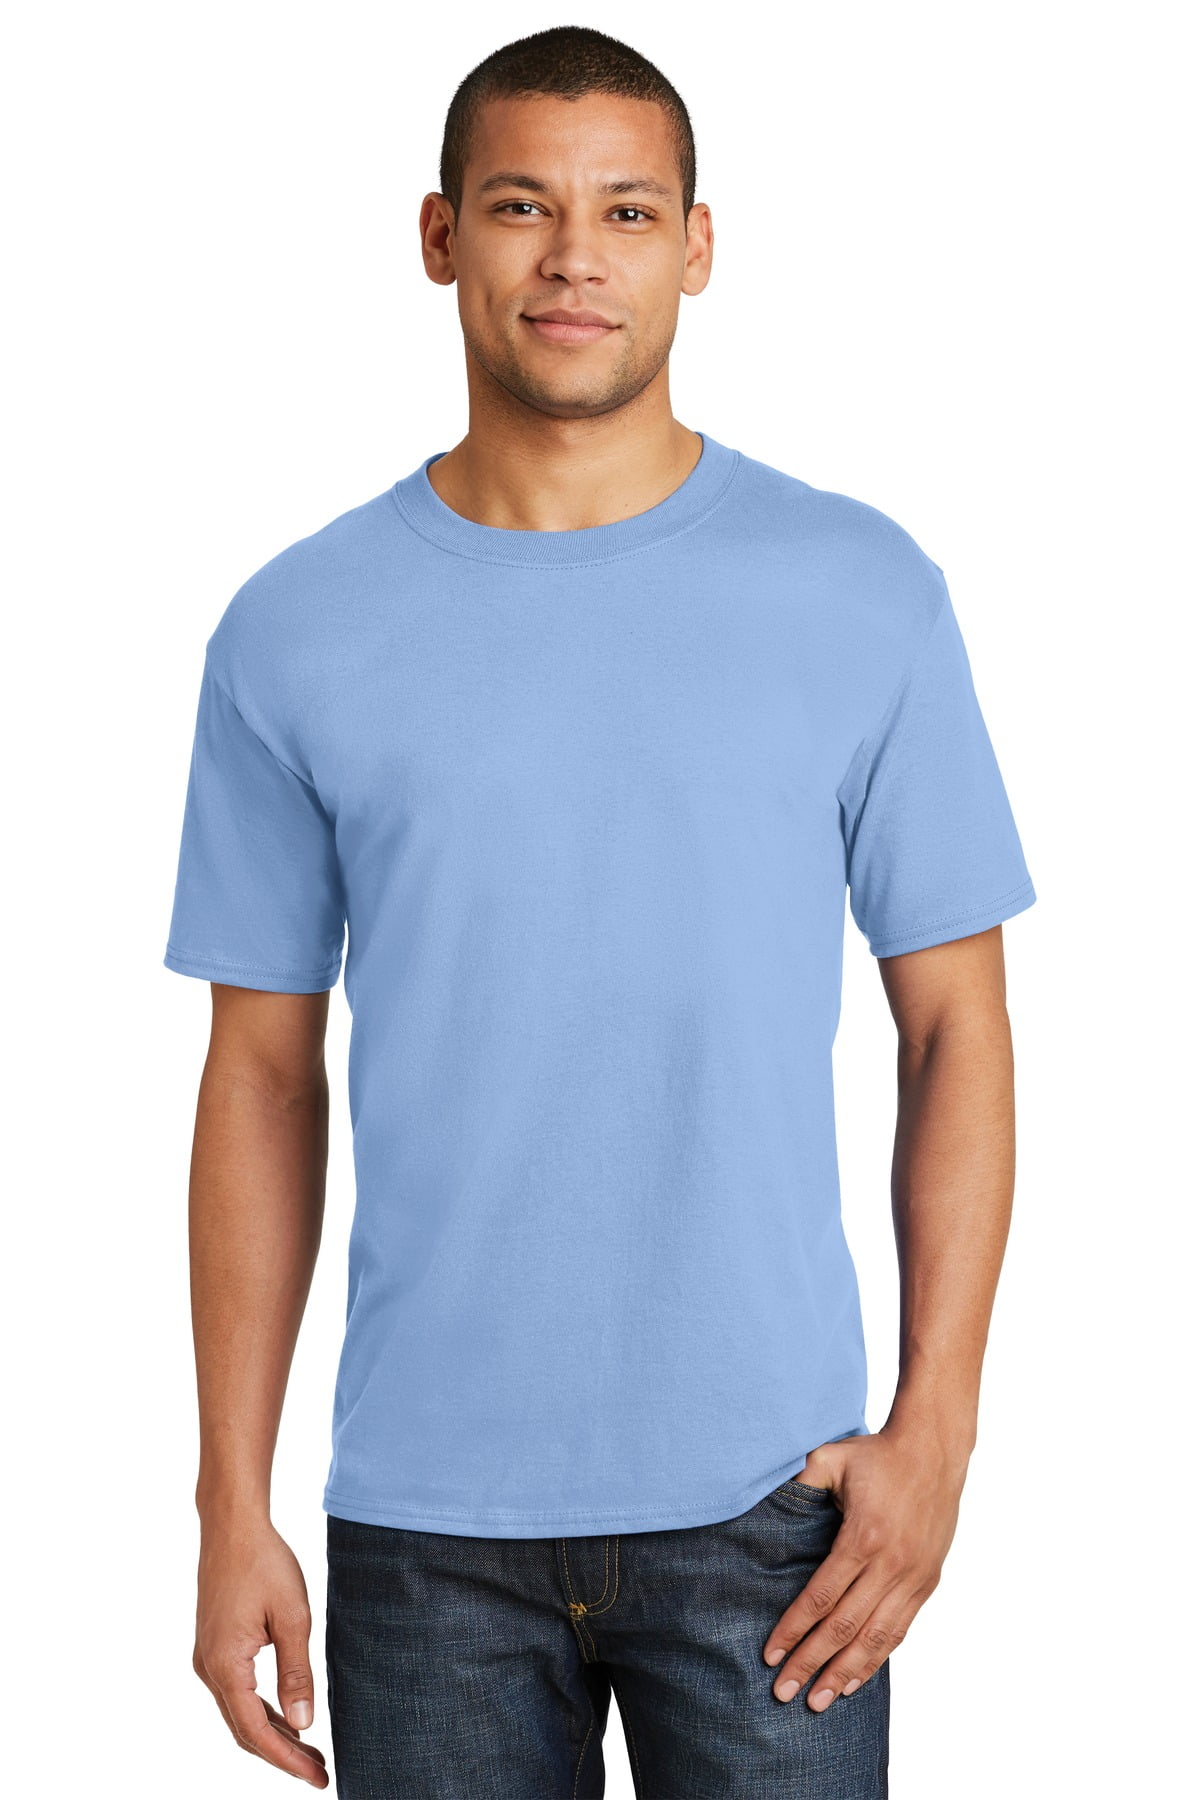 Hanes Beefy-T Adult Short-Sleeve T-Shirt